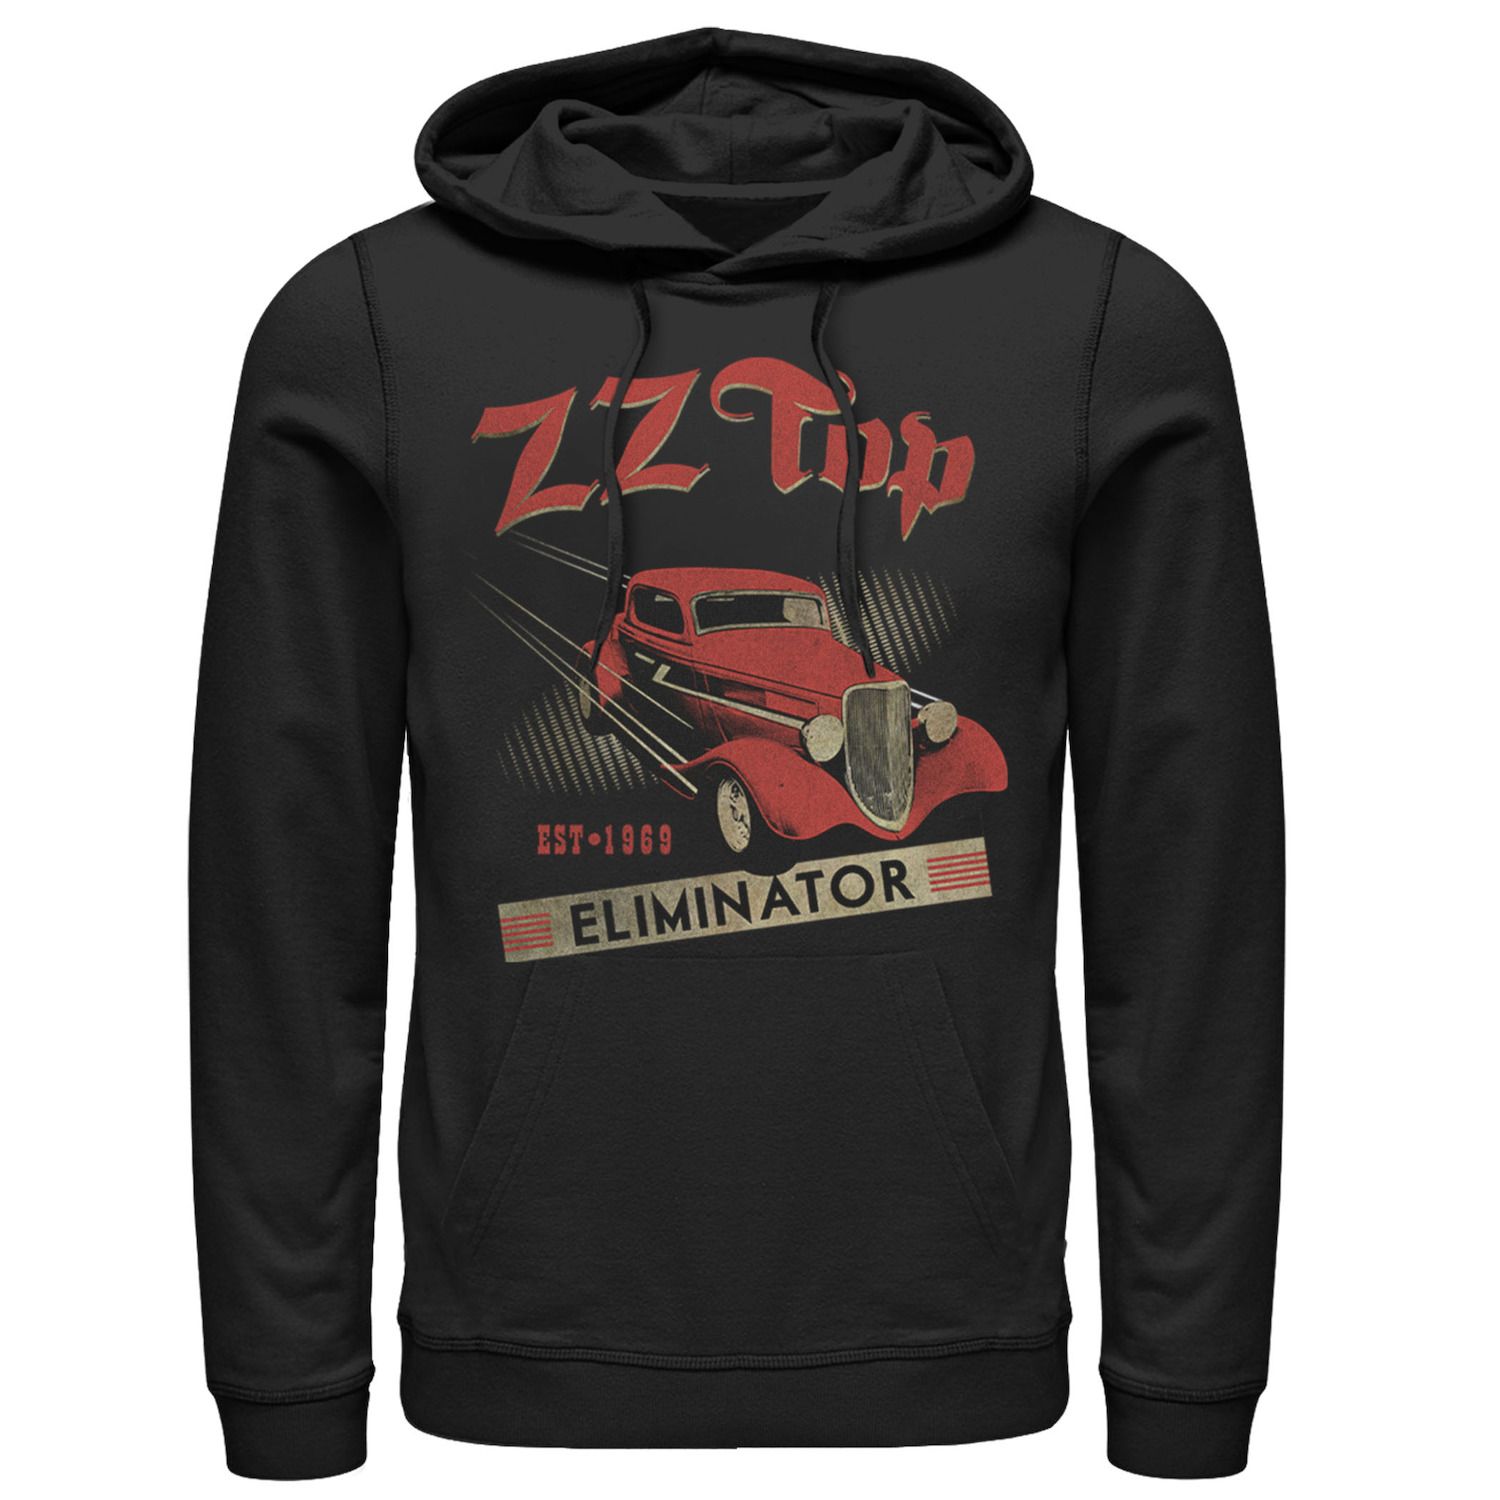 Мужская худи с графическим логотипом ZZ Top Eliminator Hot Rod Licensed Character